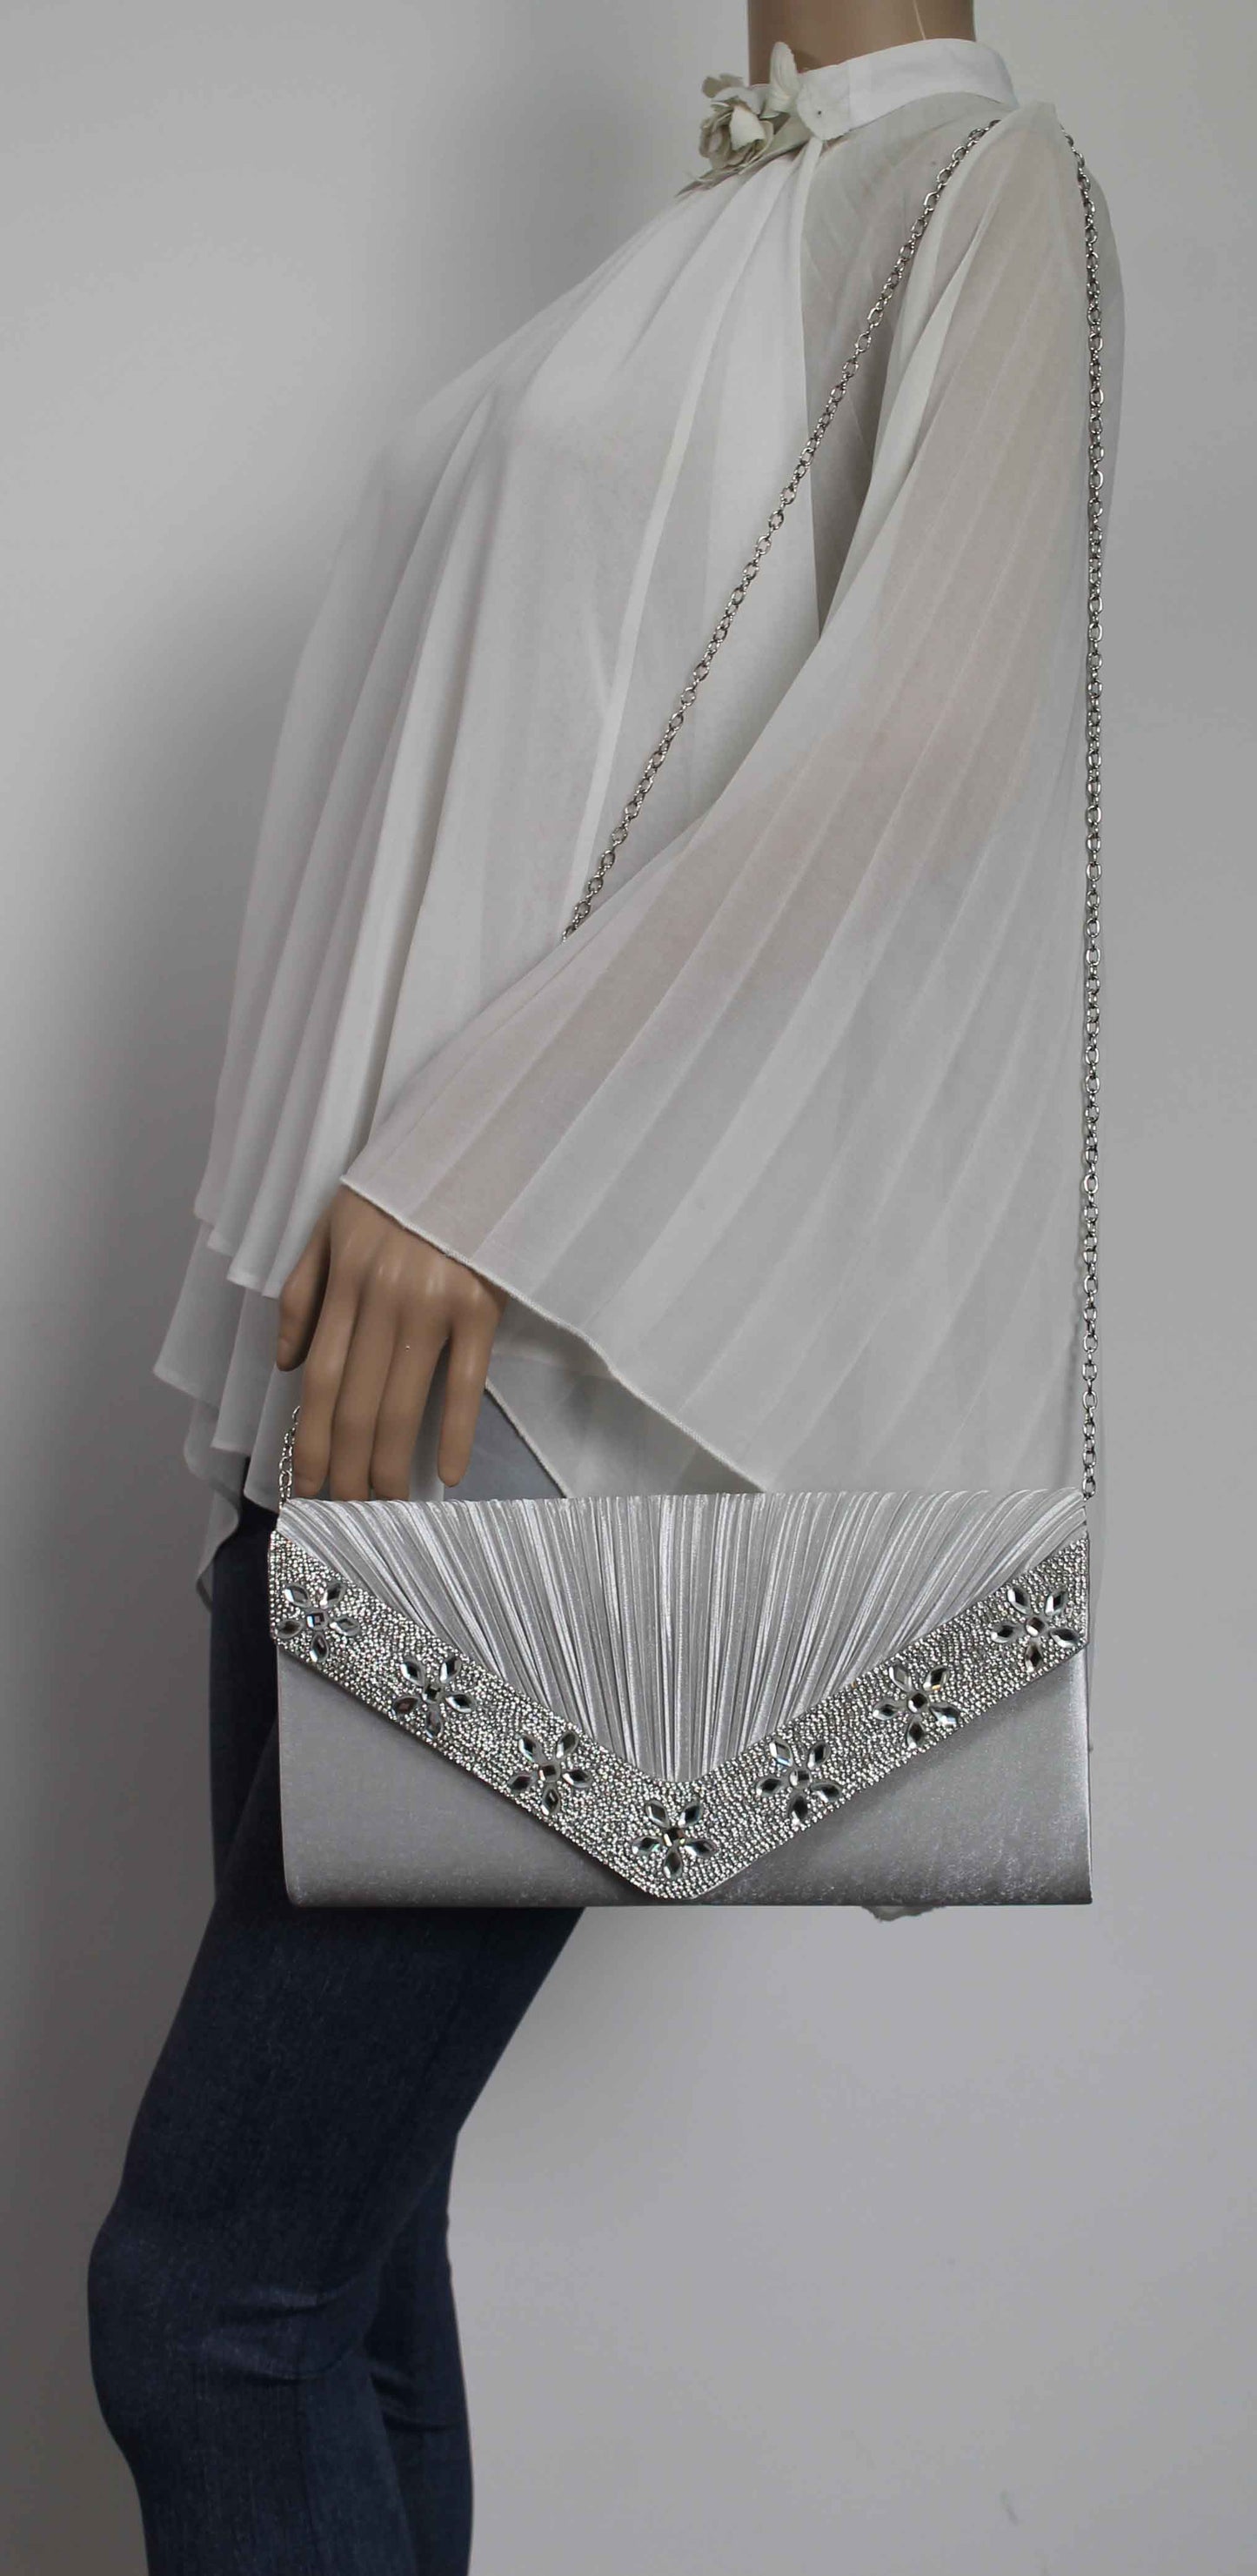 SWANKYSWANS Rylie Floral Diamante Clutch Bag Silver Cute Cheap Clutch Bag For Weddings School and Work